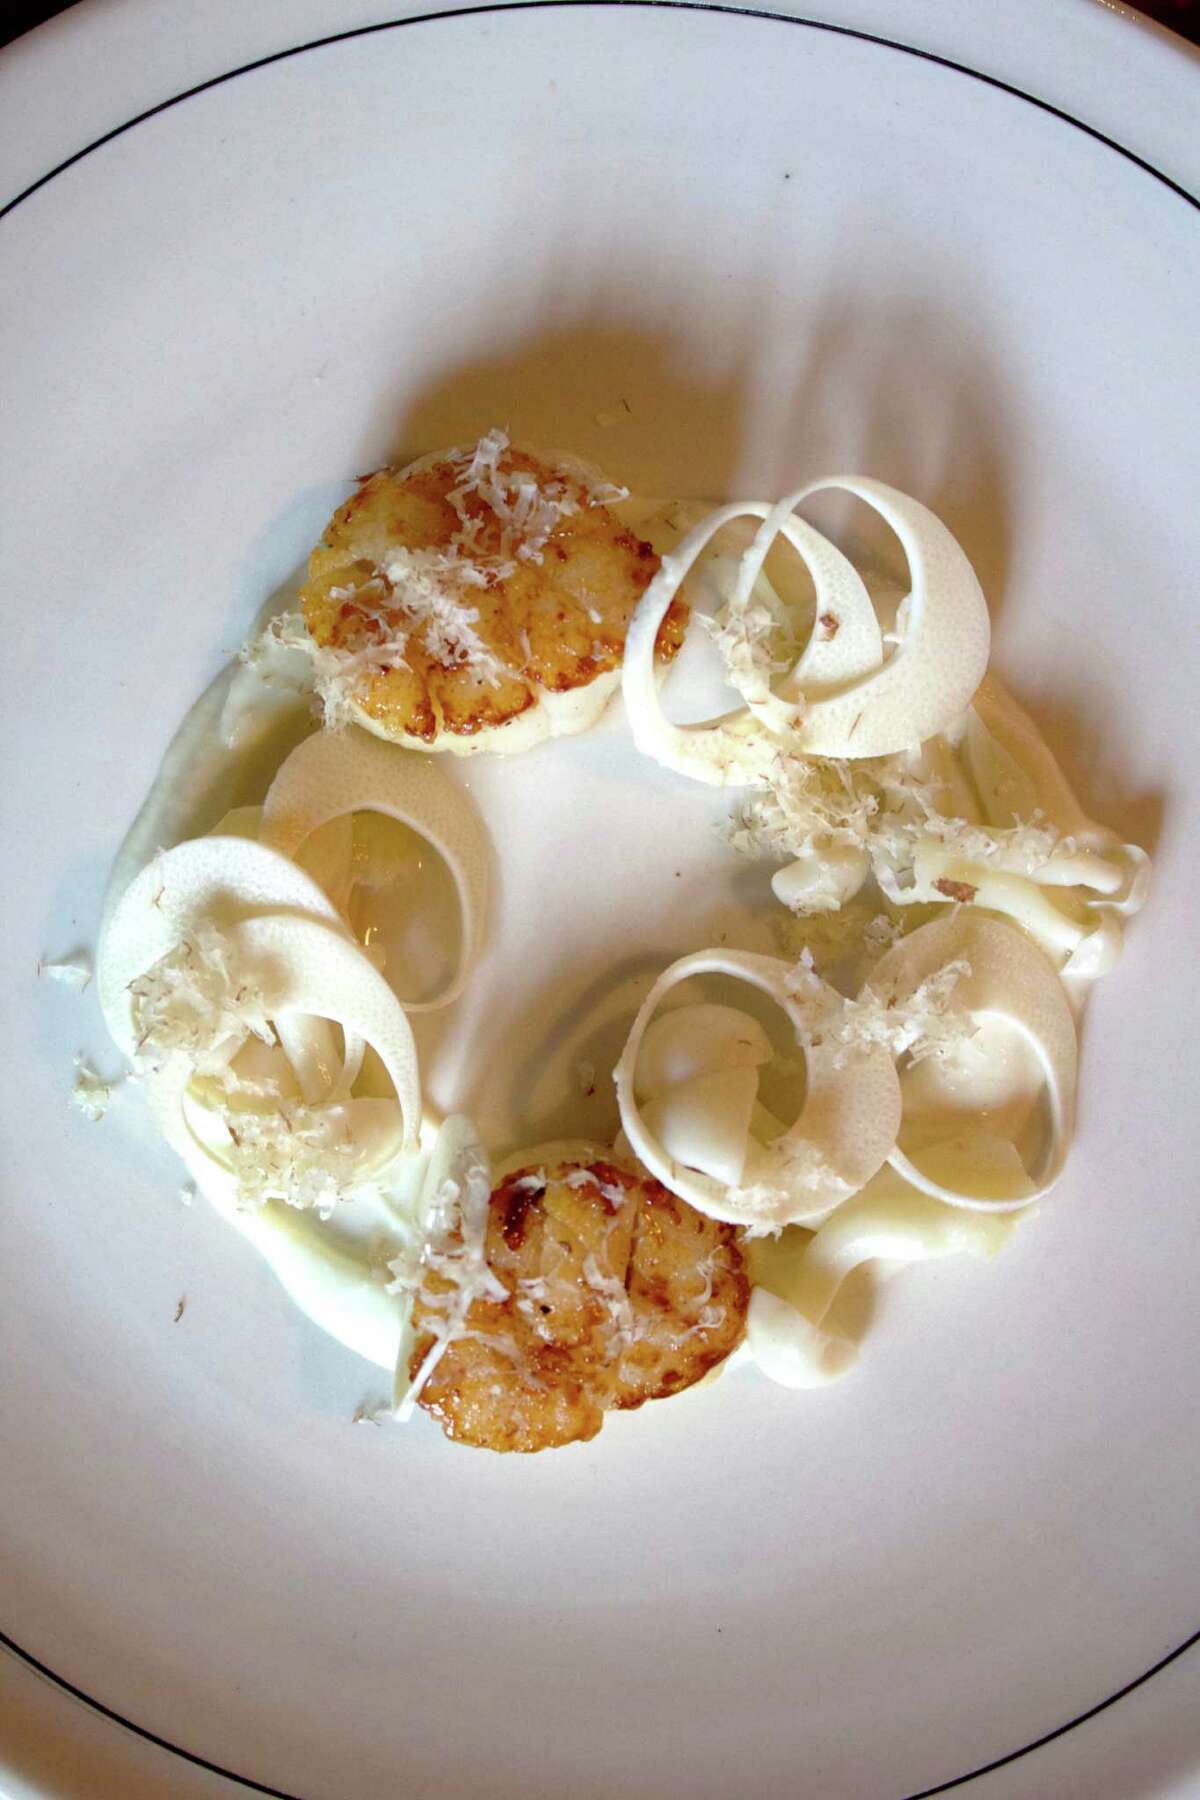 Hotate shiro: scallop, heart of palm, and Hon Shimeji (white beech) mushrooms from chef Lance Gillum at Uchi Houston.